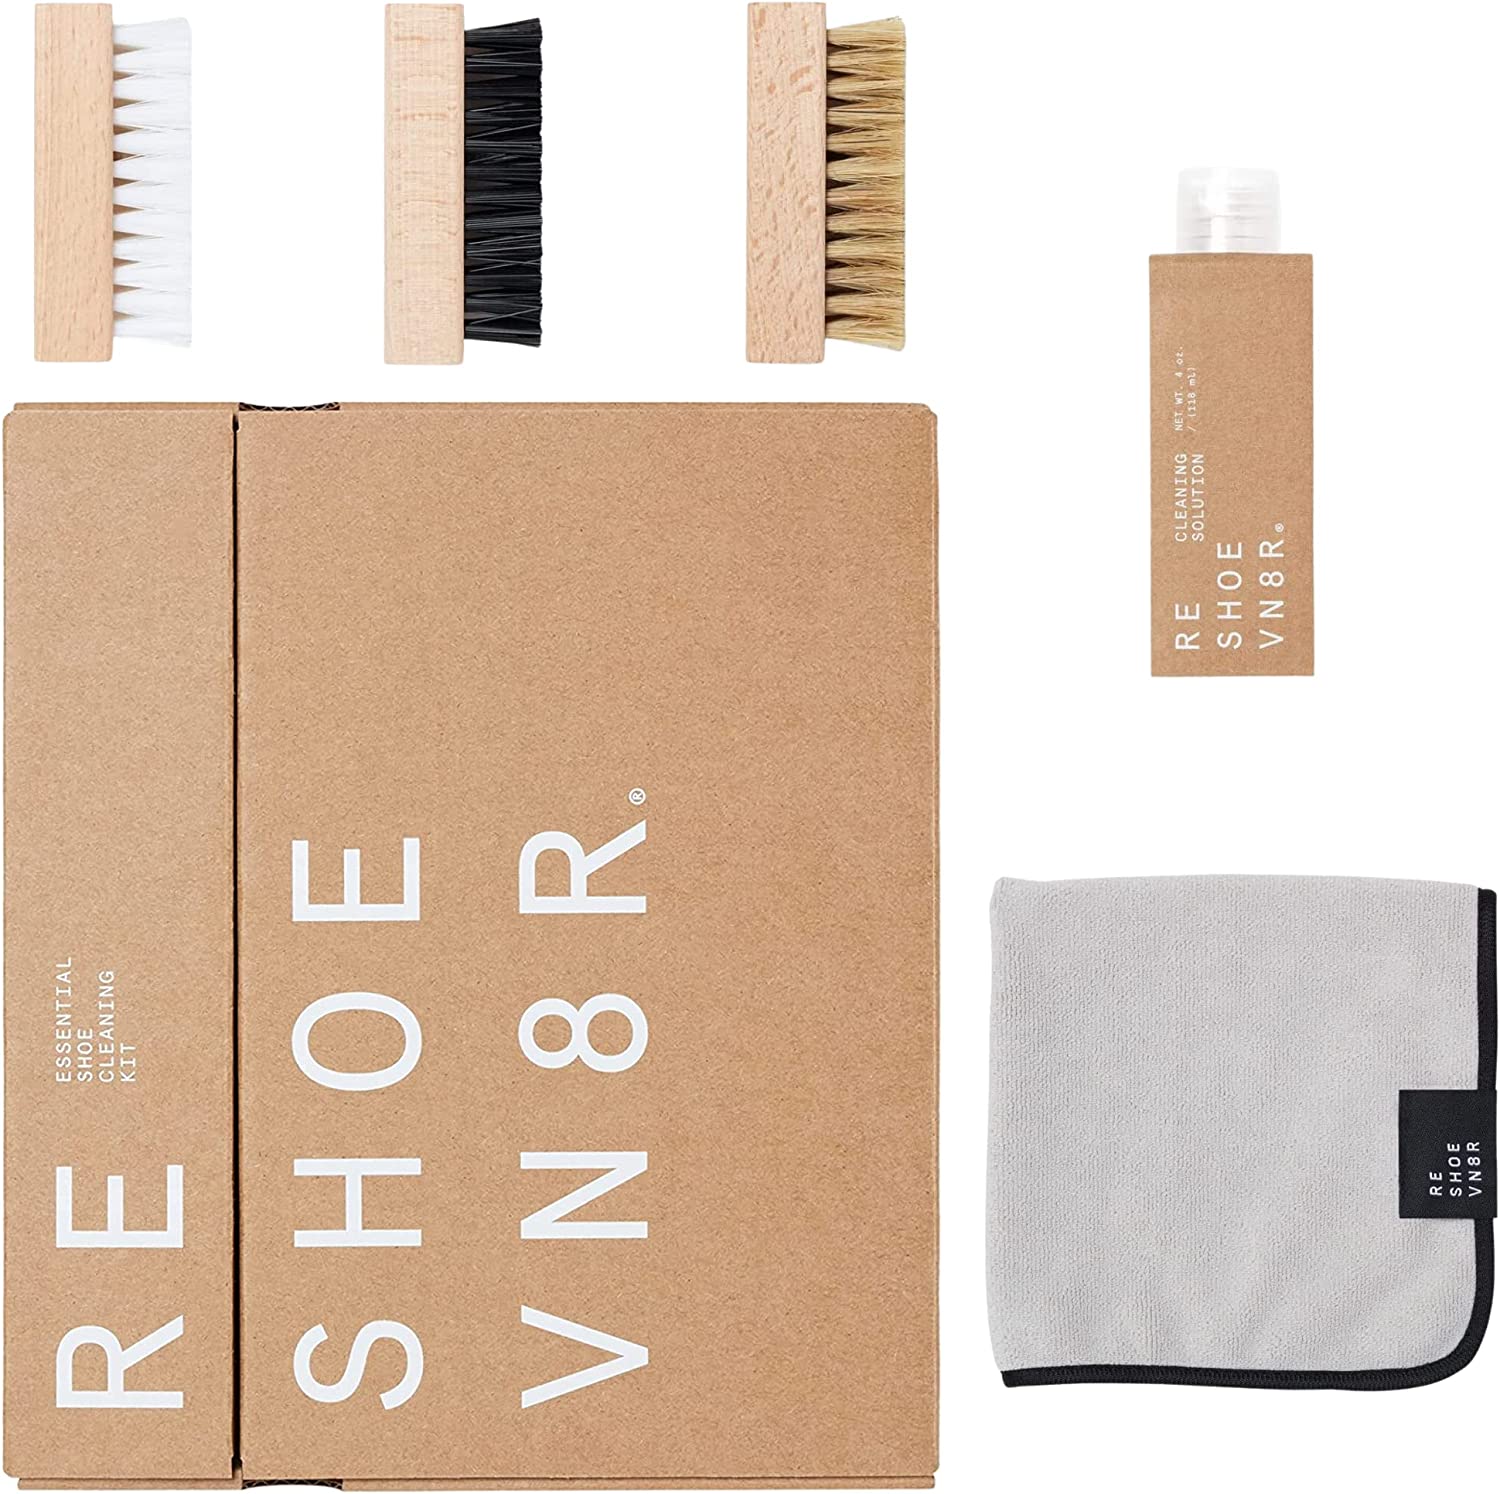 Reshoevn8r All-In-1 Essential Suede Shoe Cleaner Kit